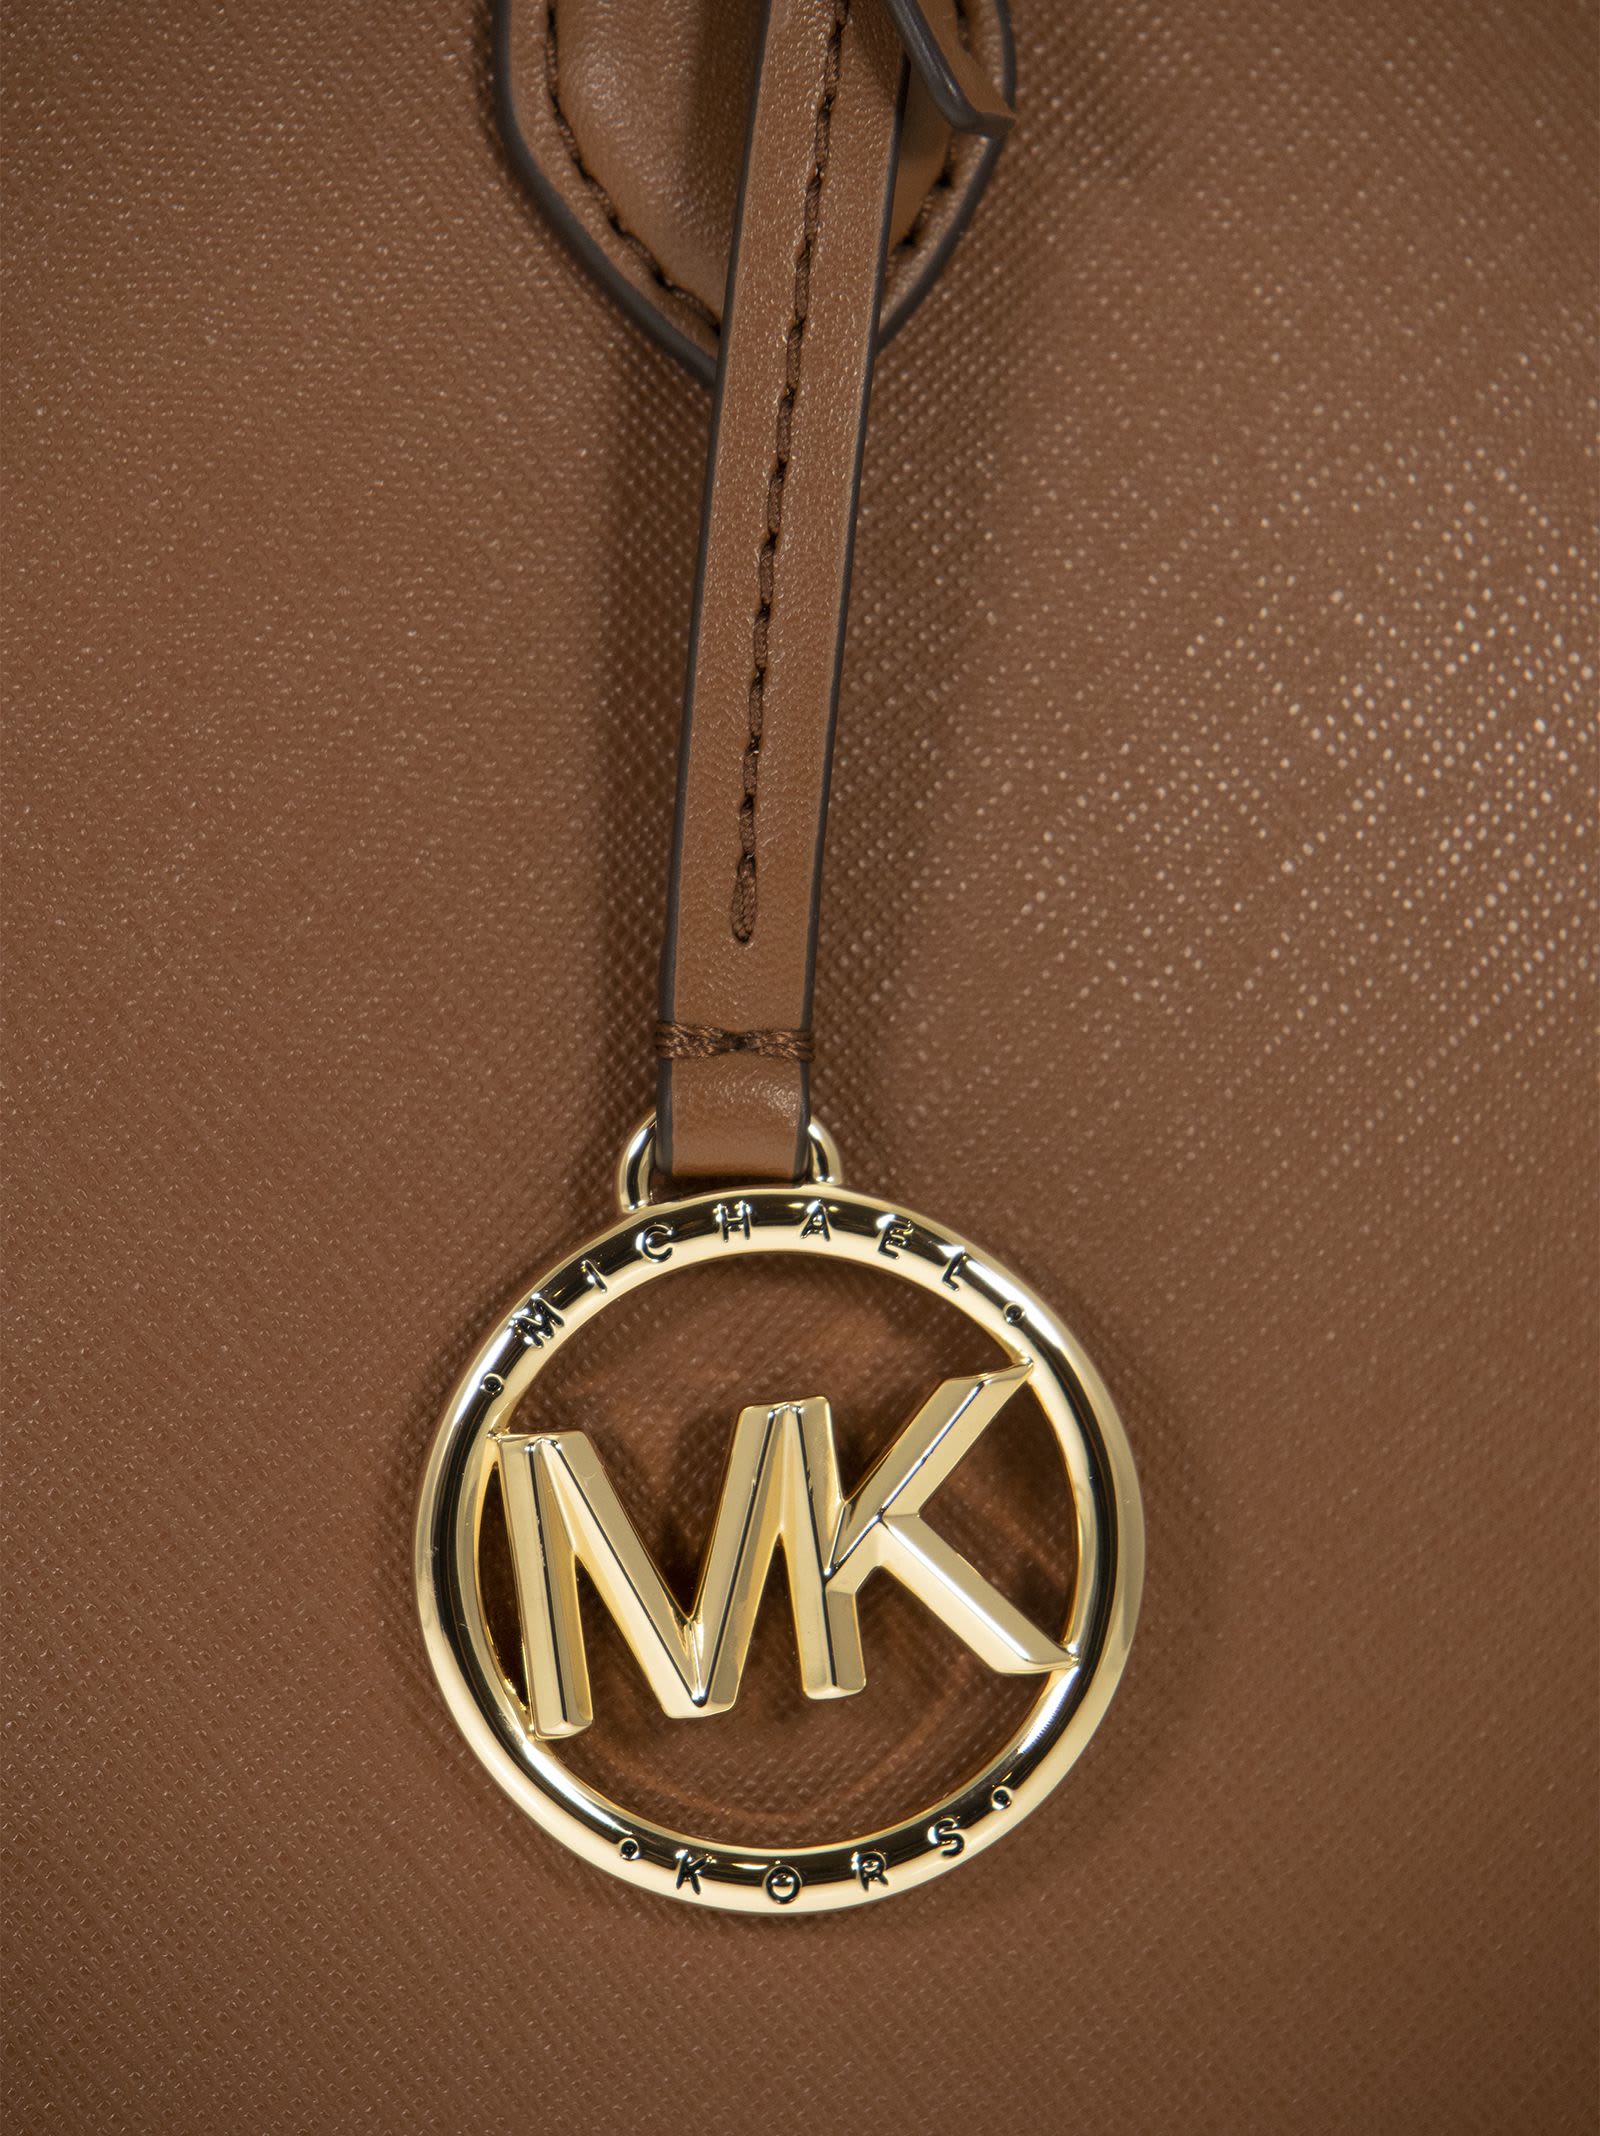 Michael Michael Kors Marilyn Medium Saffiano Leather Tote Bag